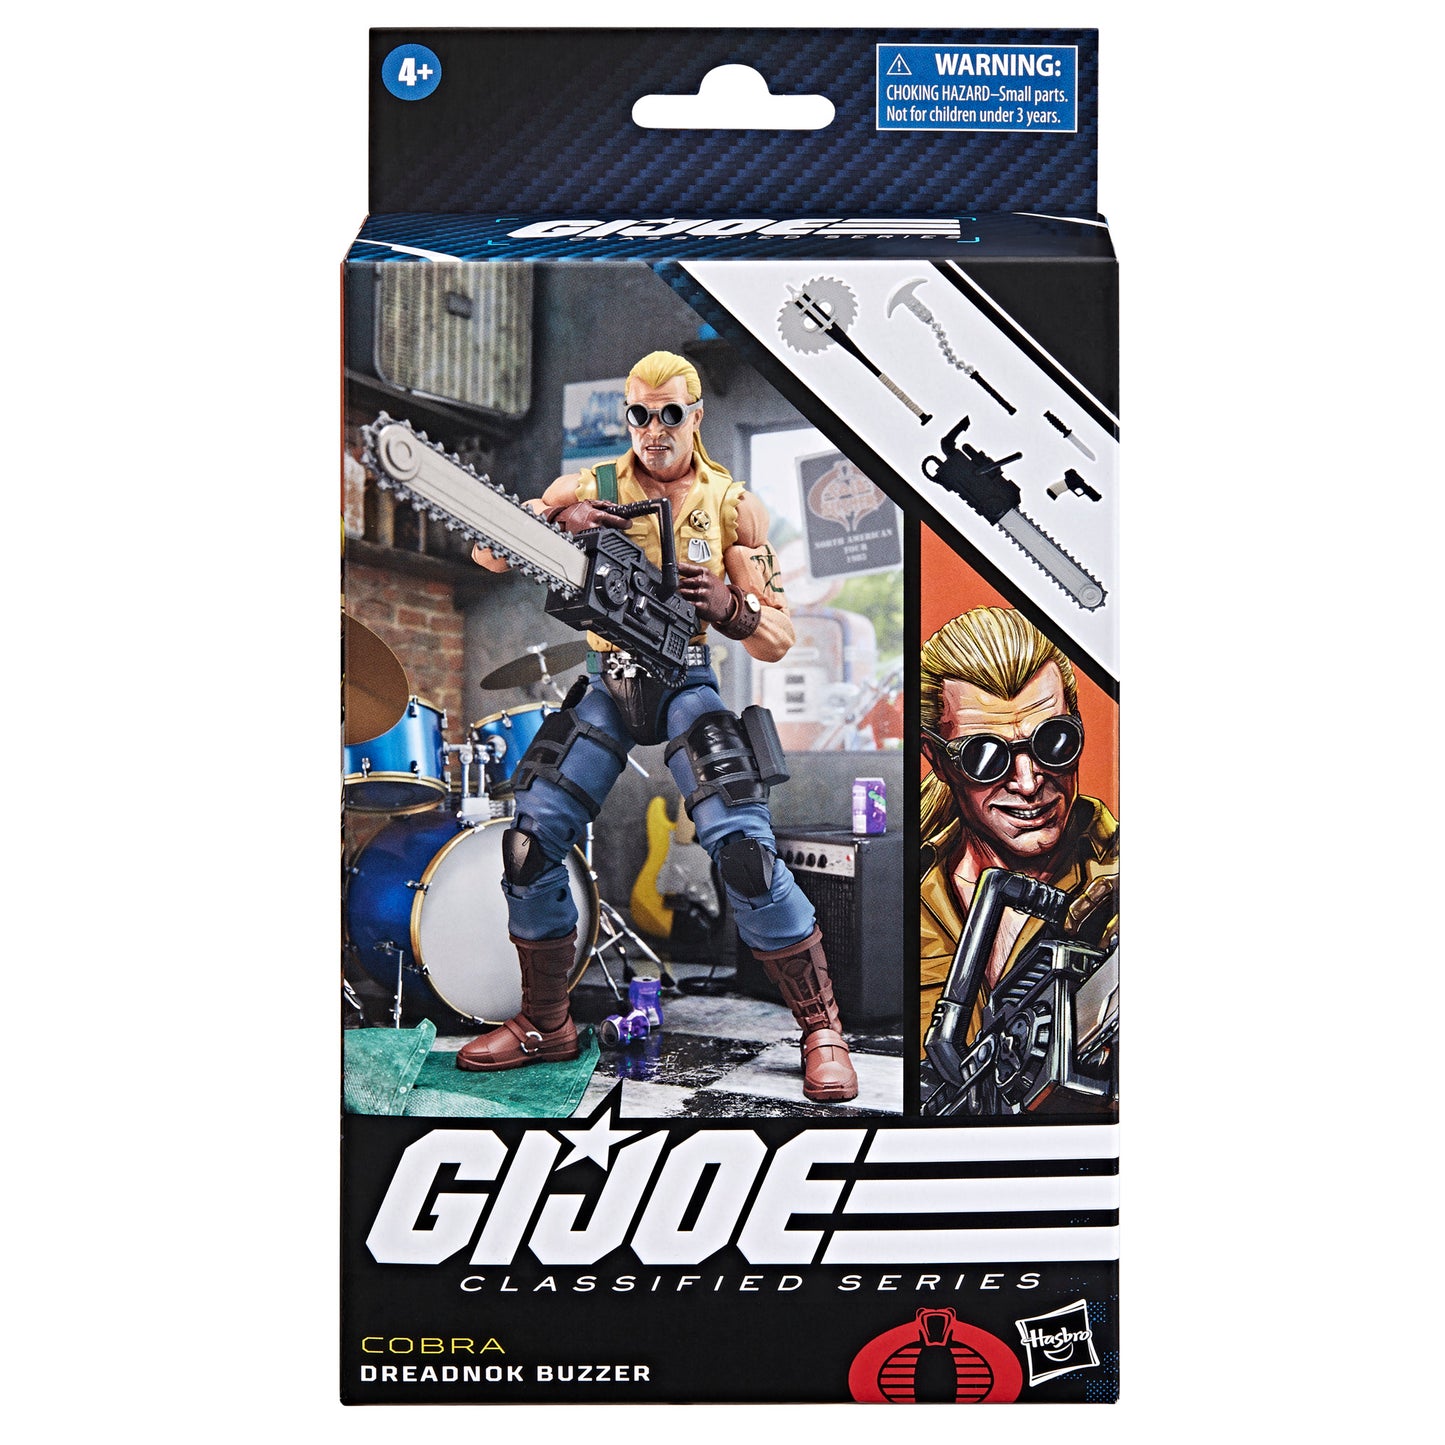  G.I. Joe Classified Series Dreadnok Buzzer, Collectible G.I. Joe Action Figure (6"), 106 HERETOSERVEYOU 3